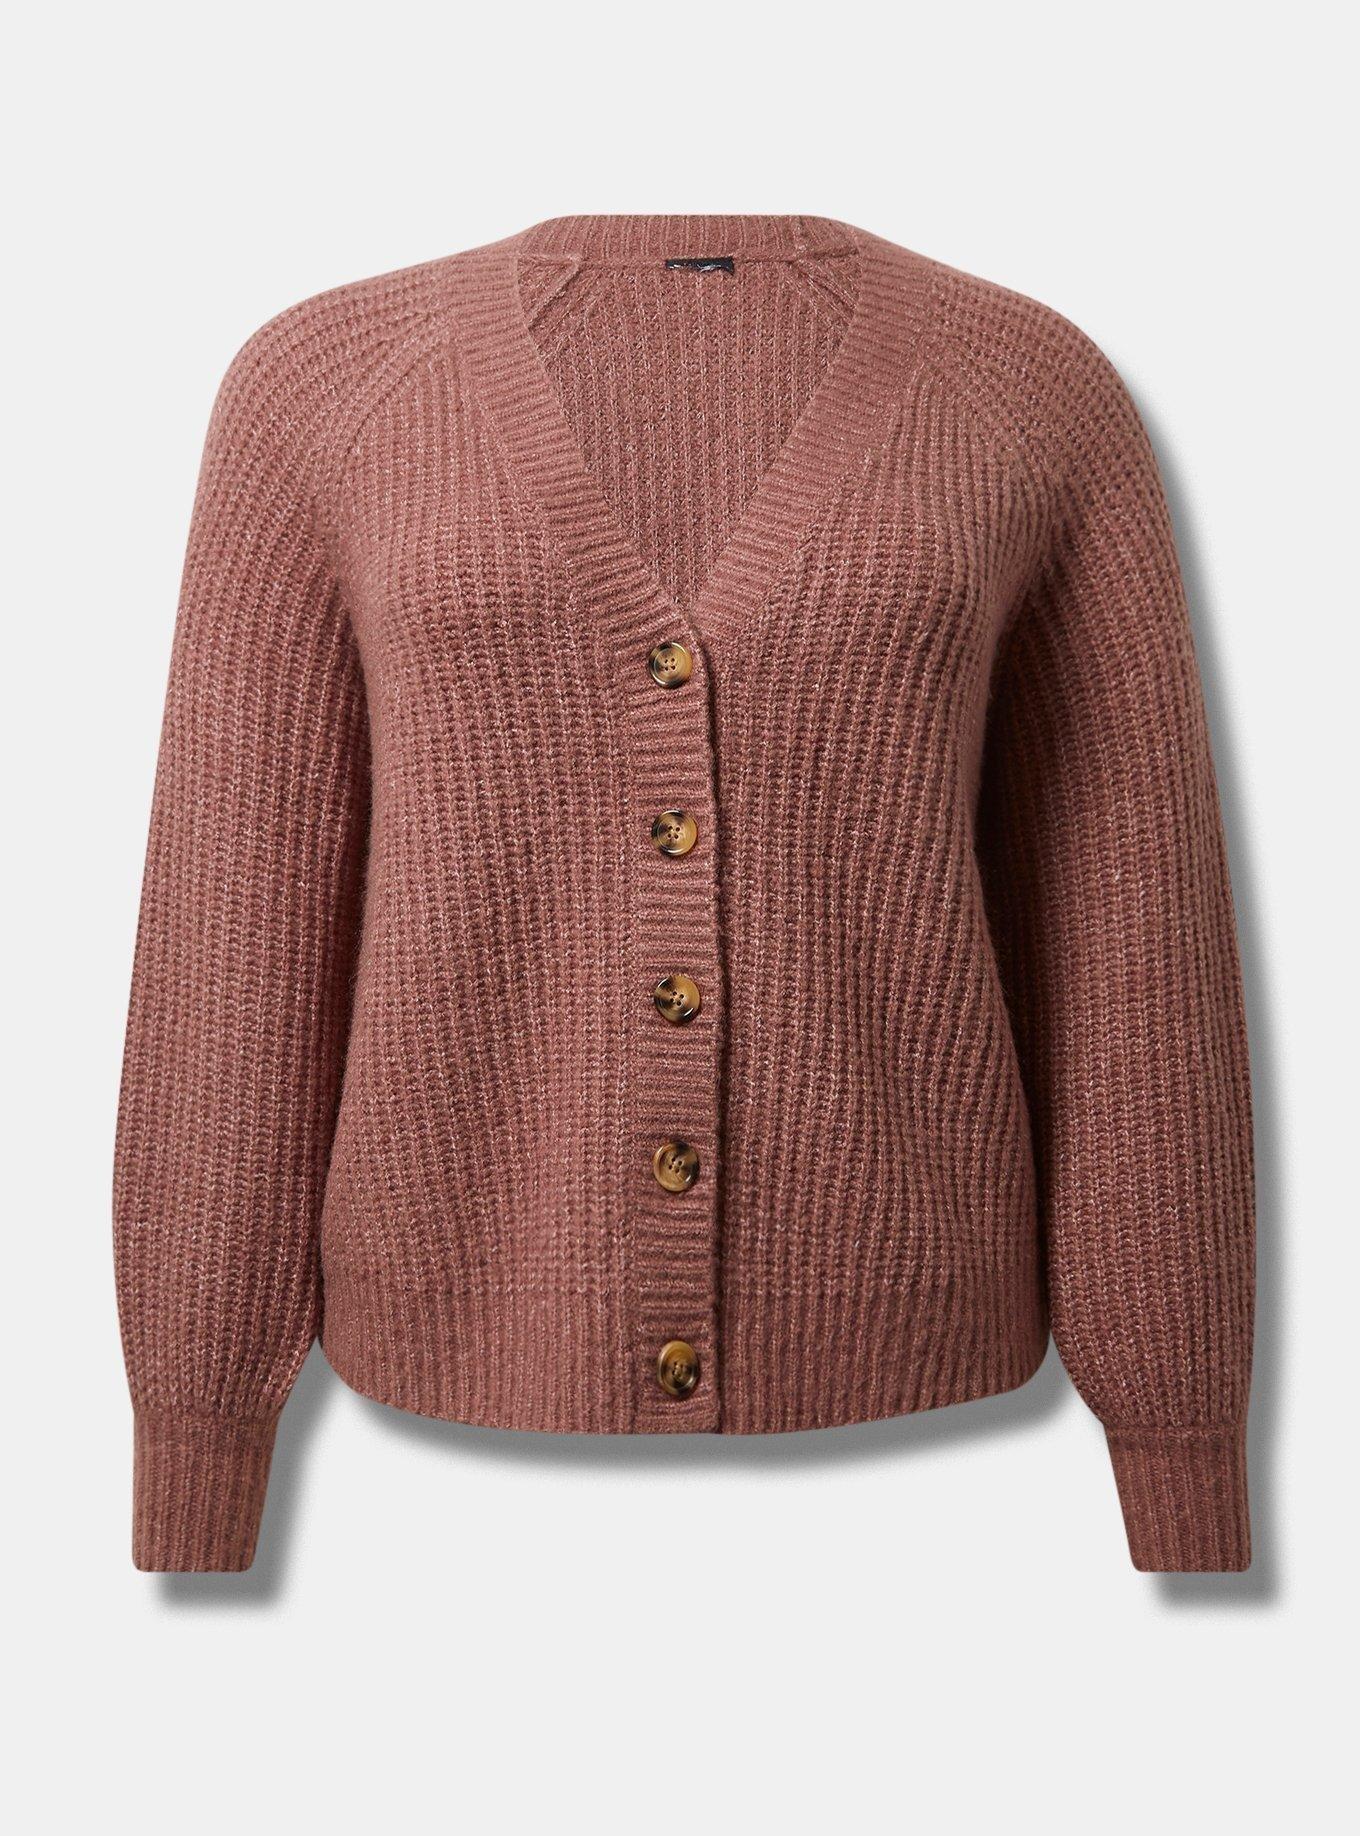 Plus Size - Cardigan Button Front Sweater - Torrid